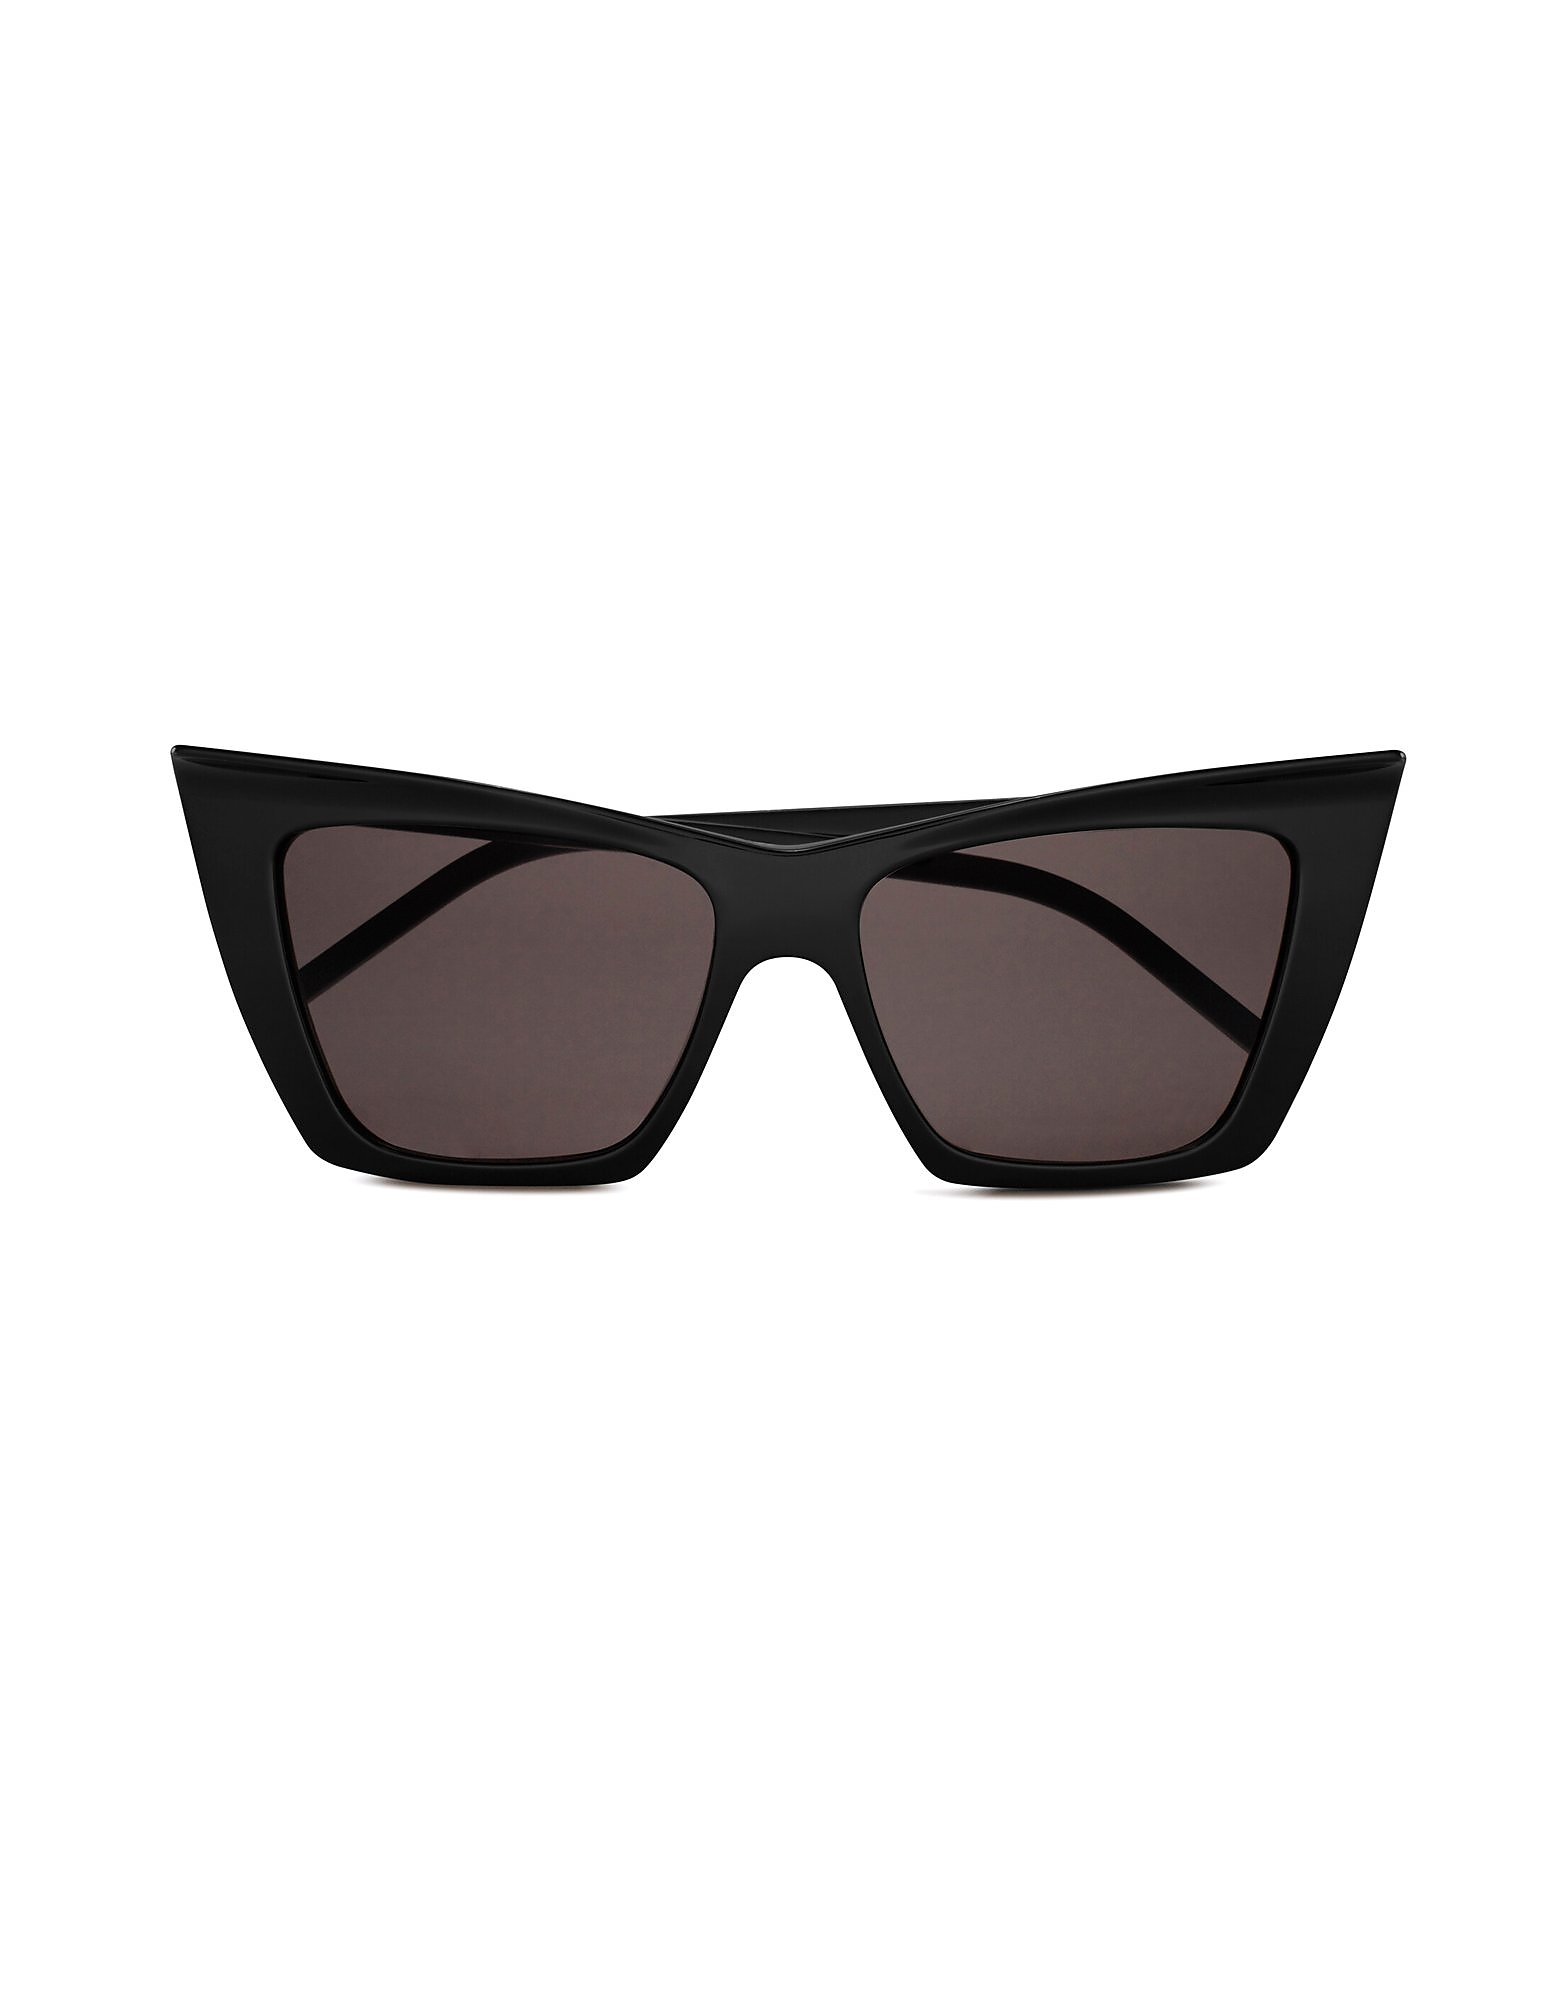 Saint Laurent Sunglasses Black Acetate Cat-Eye Kate Sunglasses